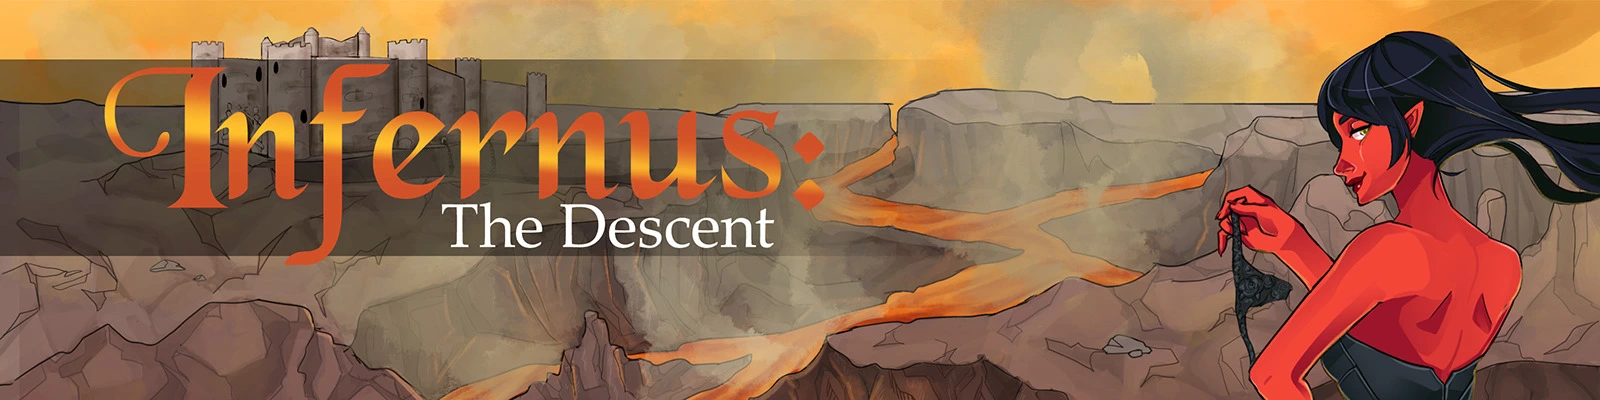 Infernus: The Descent [v0.0.15] main image